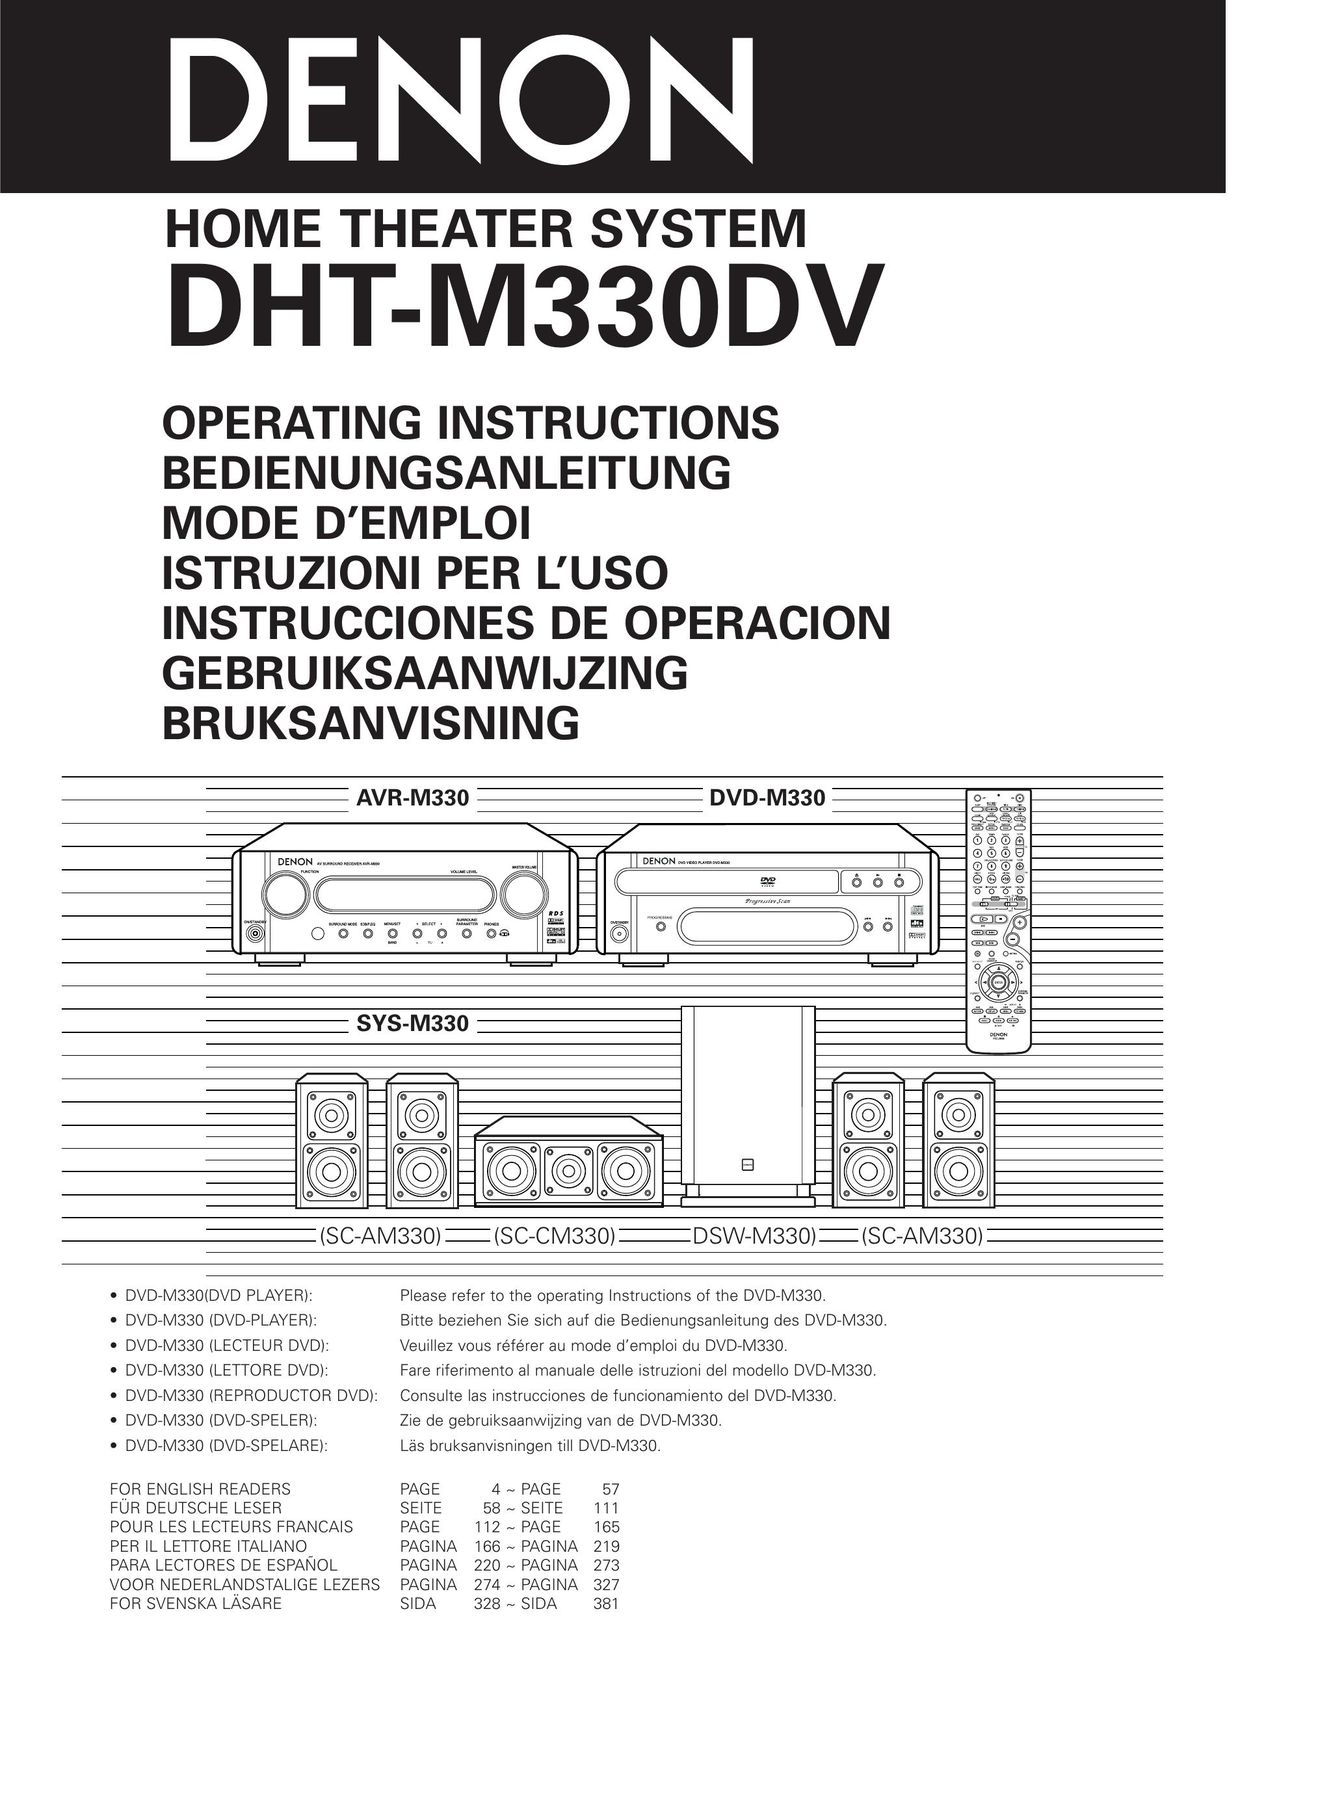 Denon DHT-M330DV Home Theater System User Manual